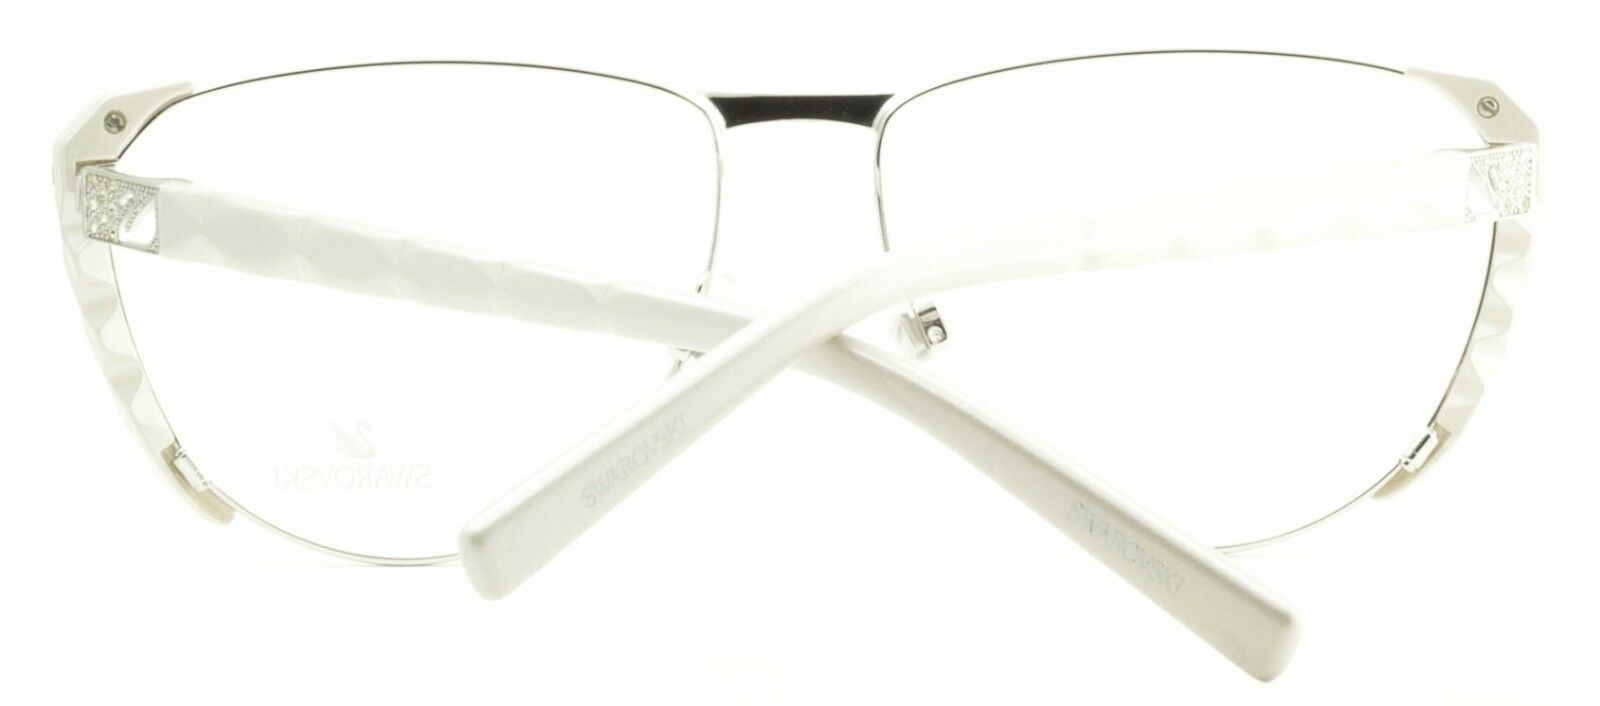 SWAROVSKI BE YOU SW 5037 Eyewear FRAMES RX Optical Glasses Eyeglasses New Italy